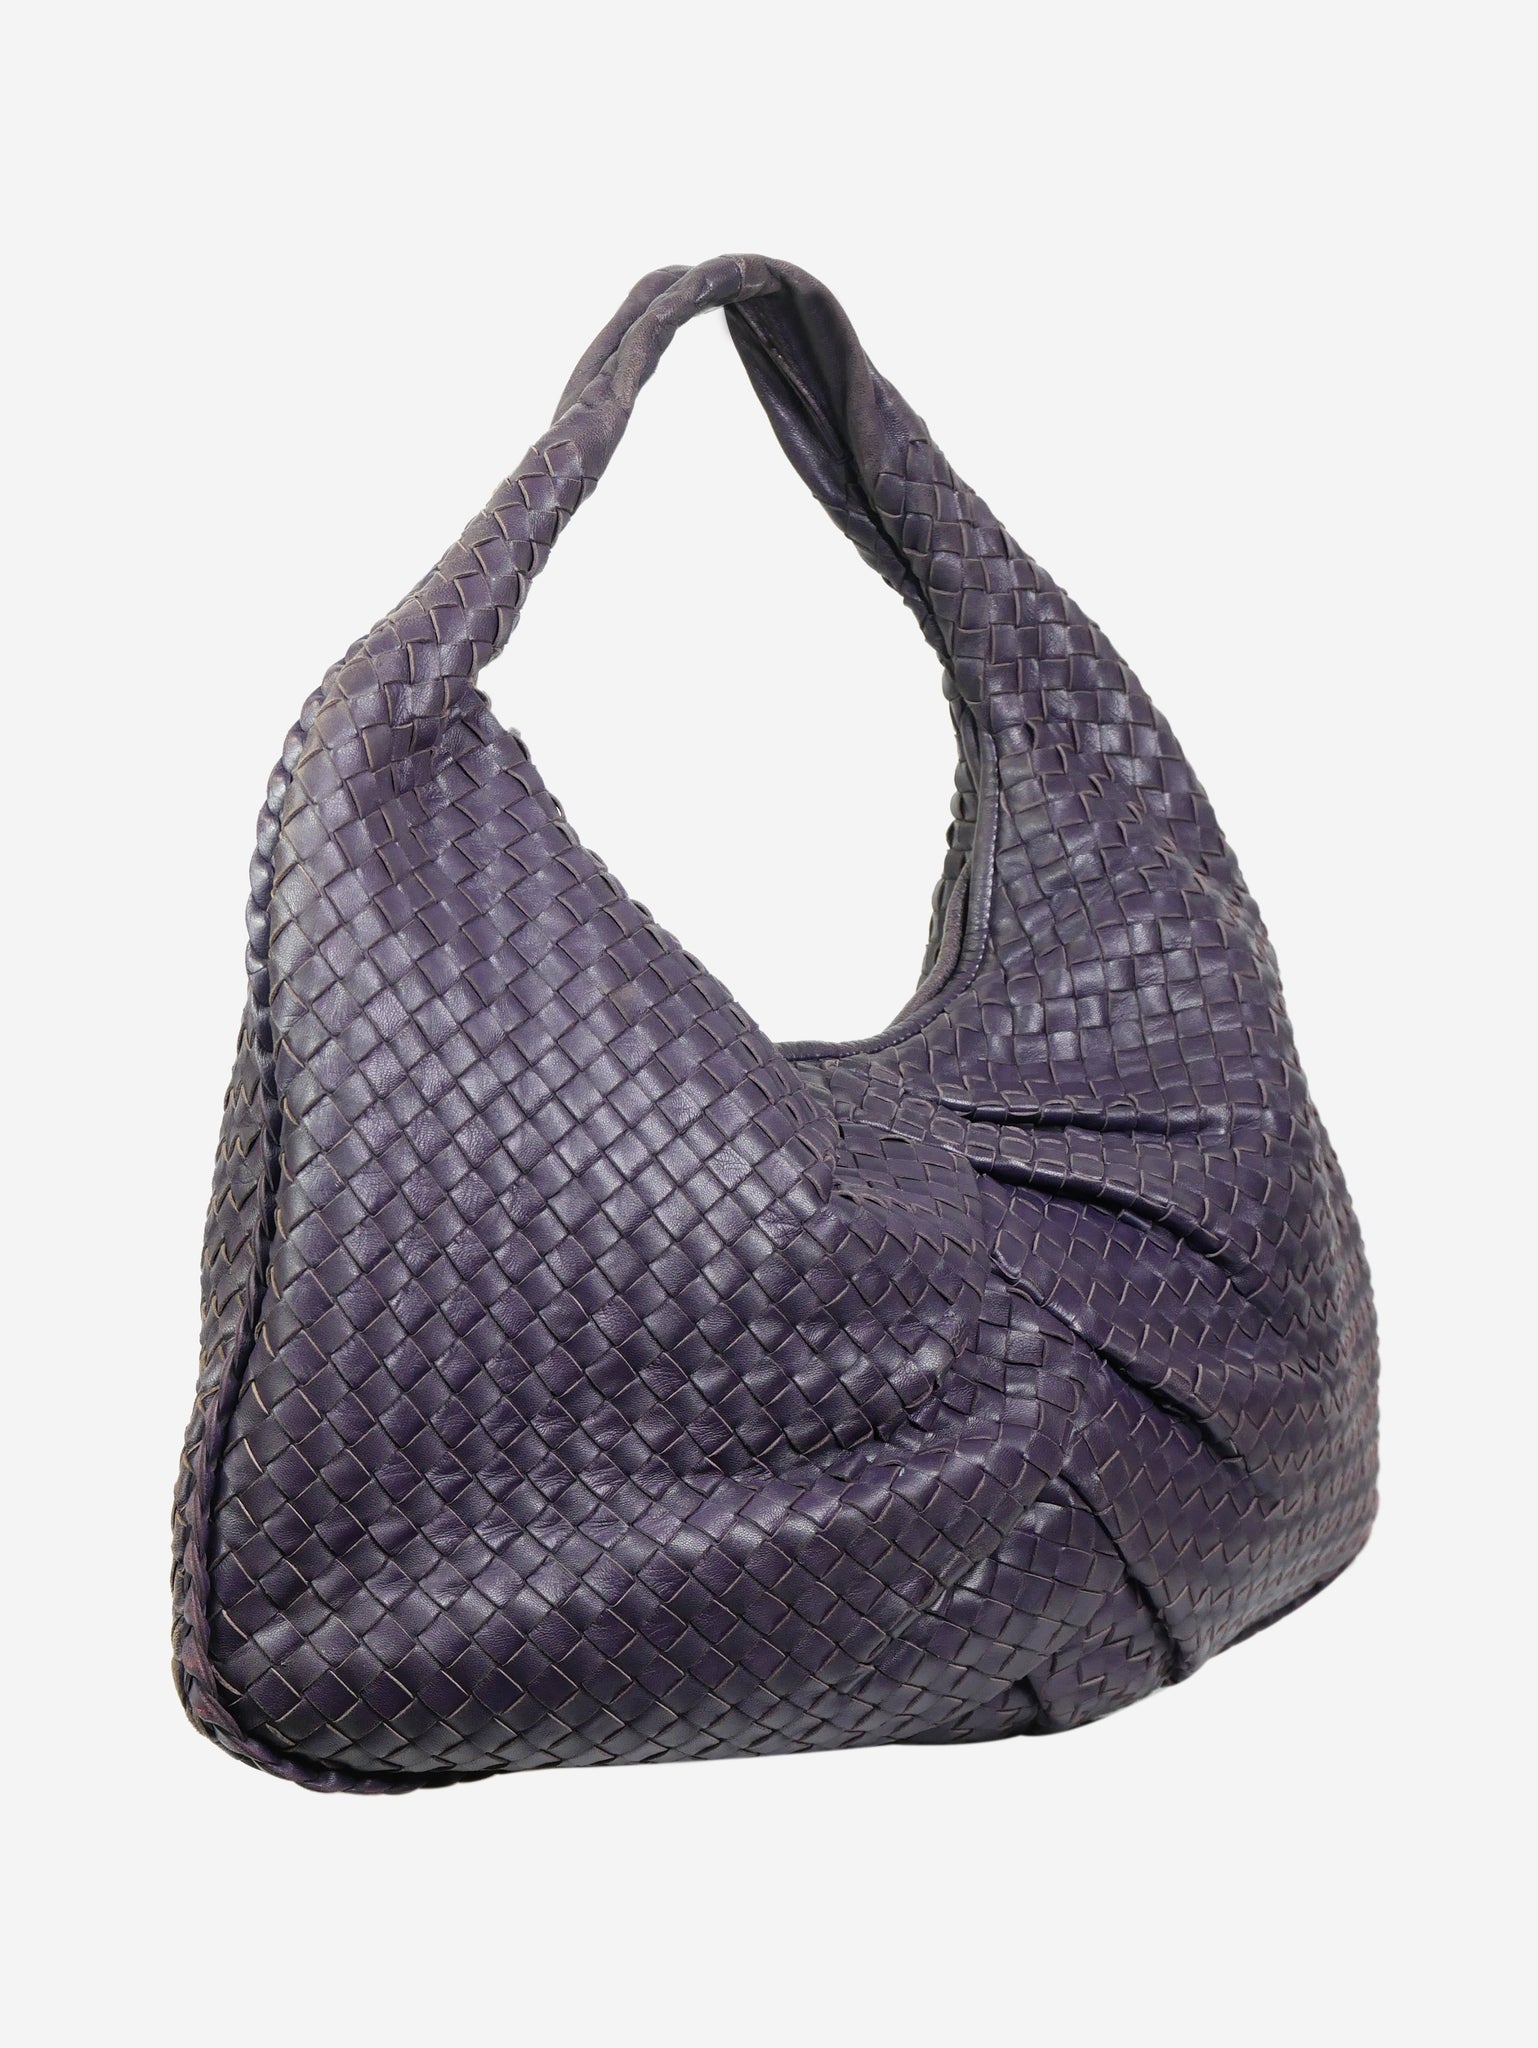 Bottega Veneta pre-owned purple intrecciato leather Jodie bag